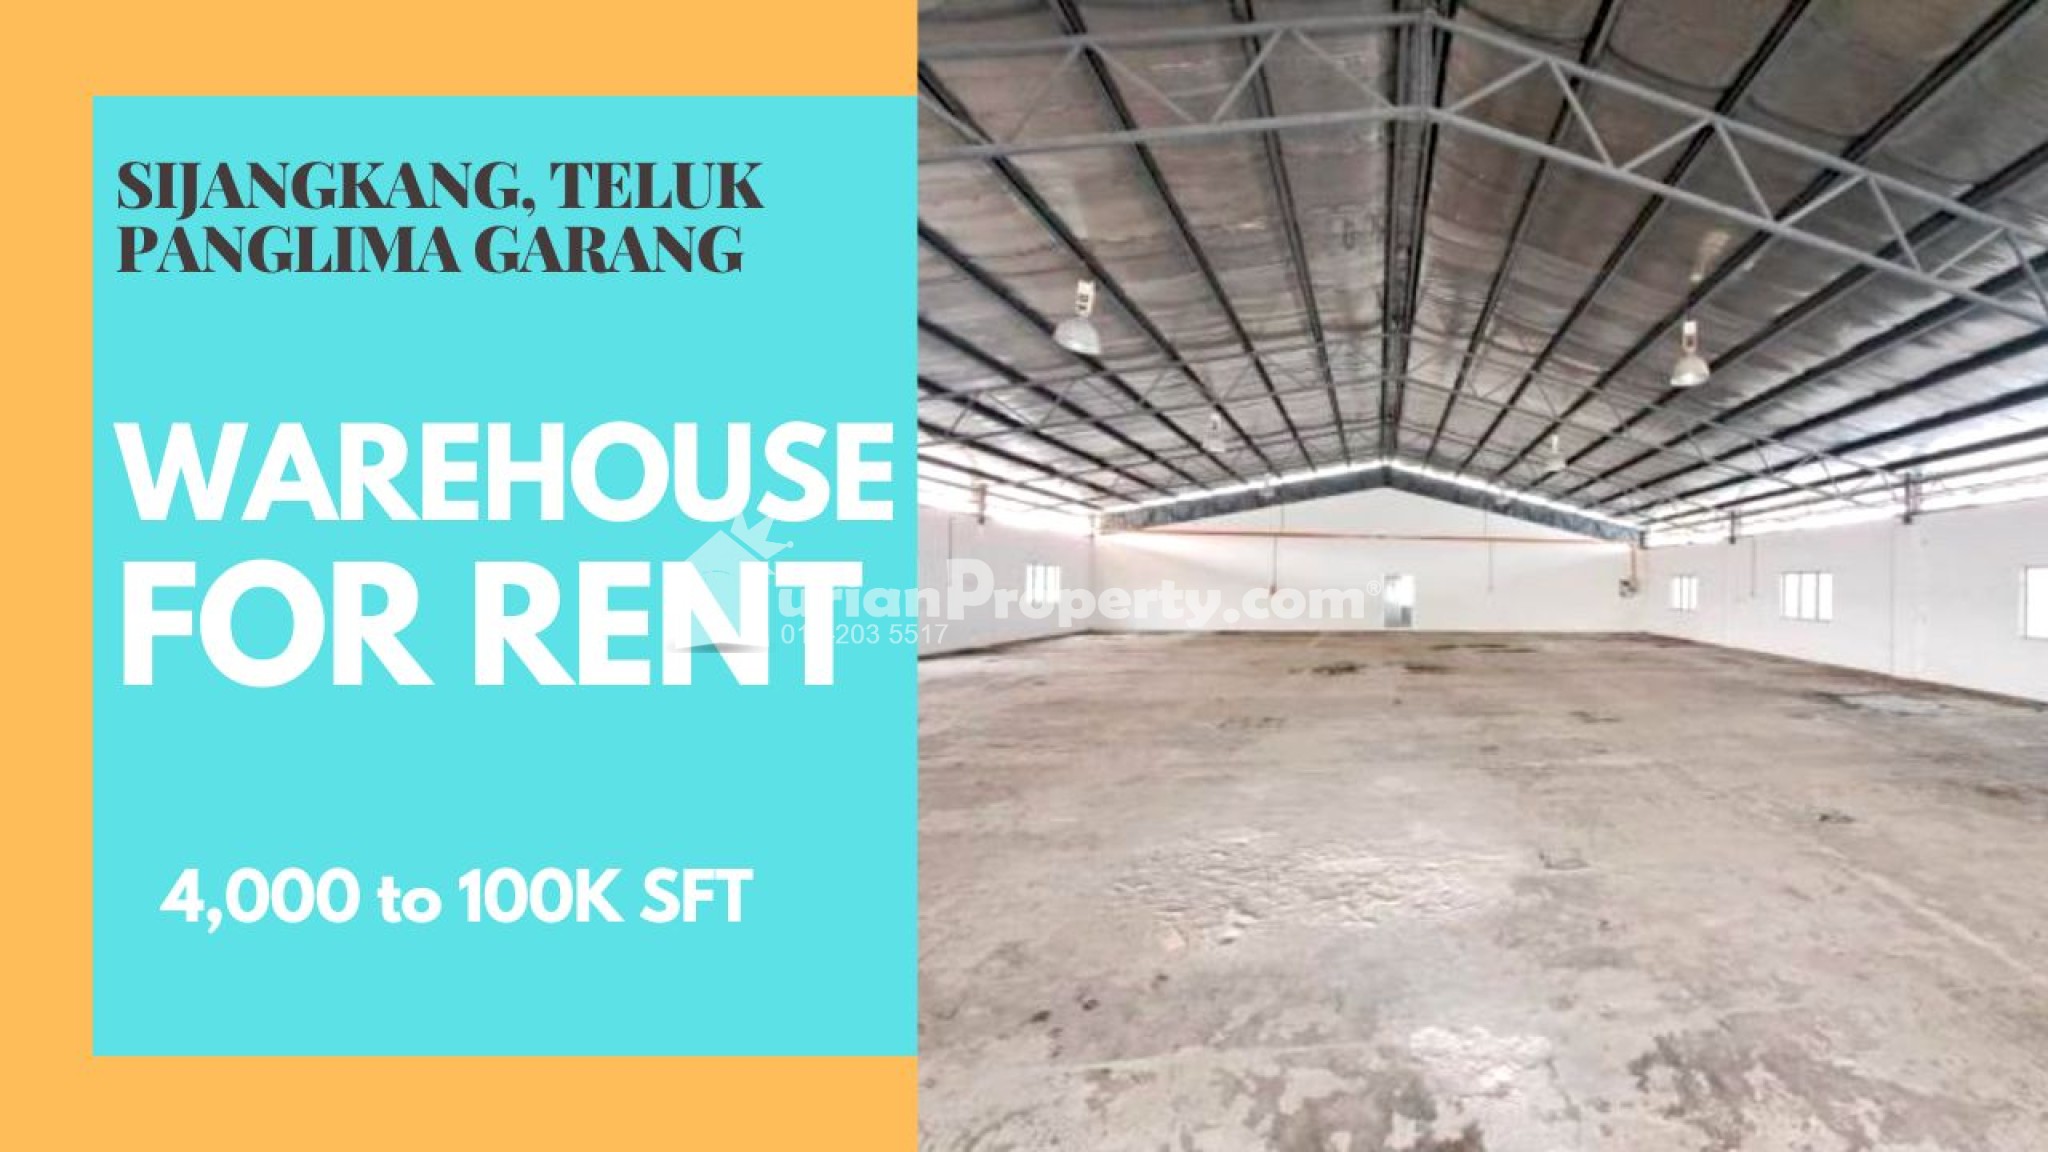 Detached Warehouse For Rent at Sijangkang